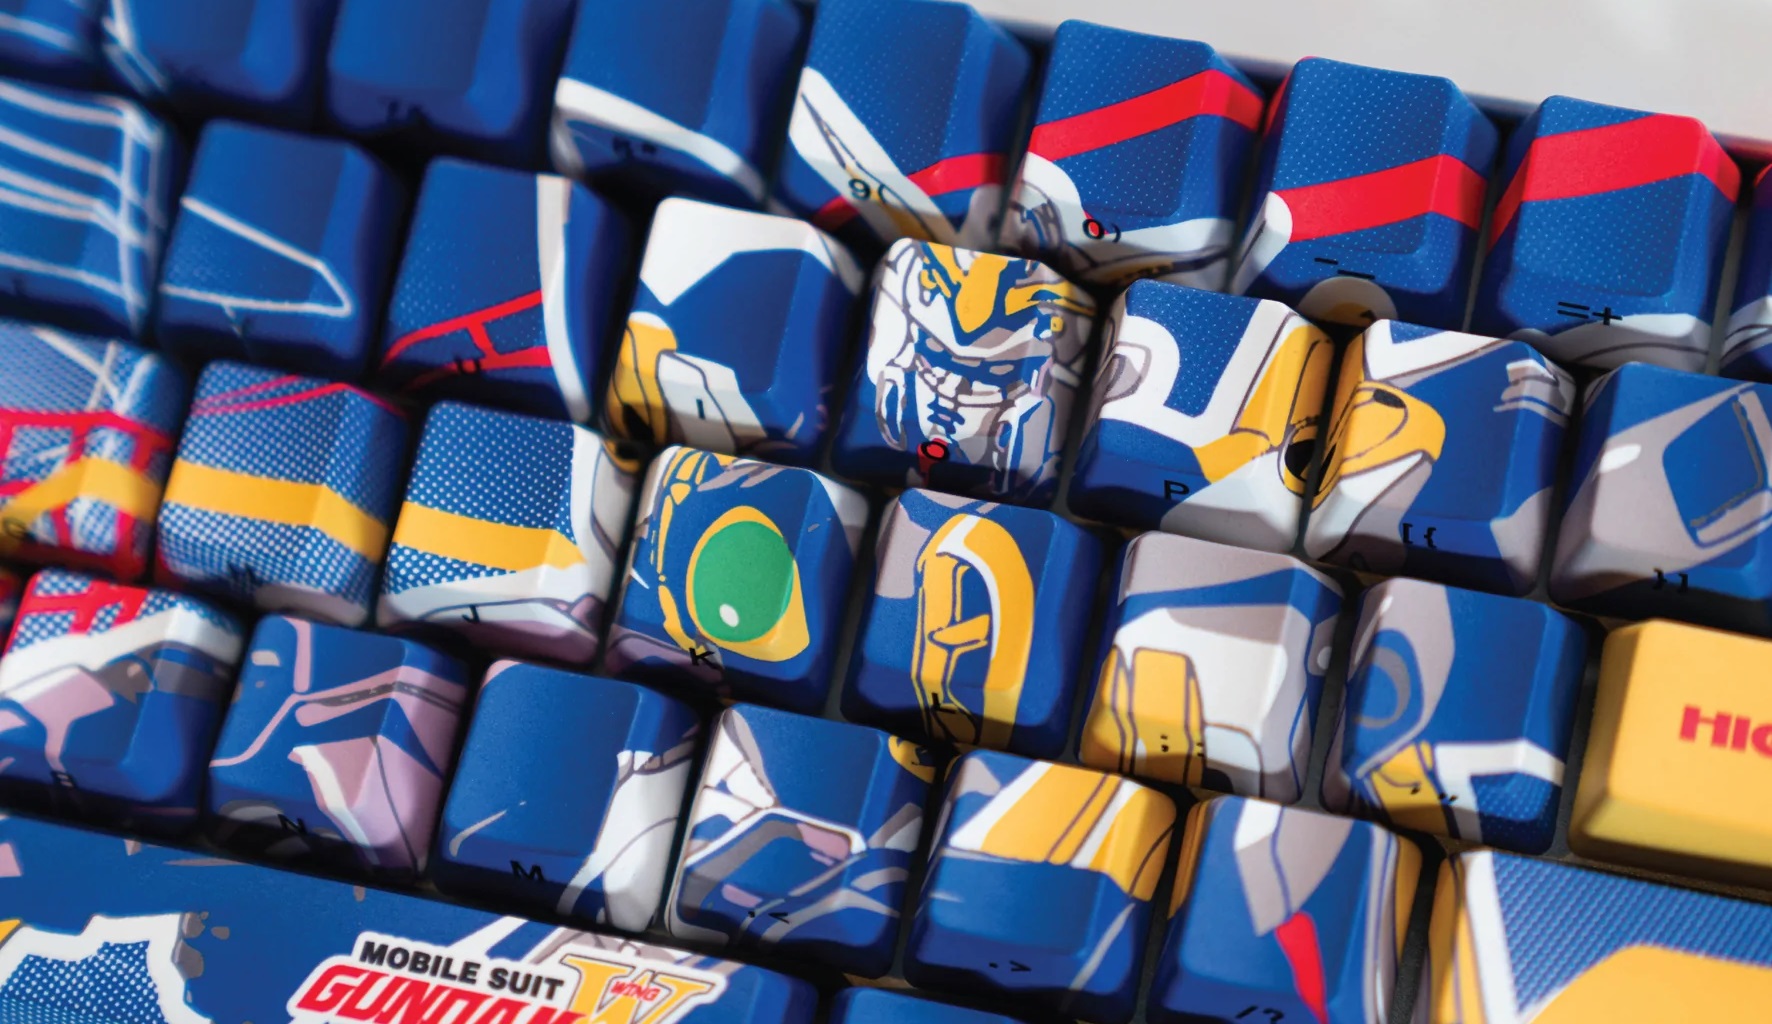  These sick Gundam keyboards eschew RGB in favor of vibrant '90s mecha prints 